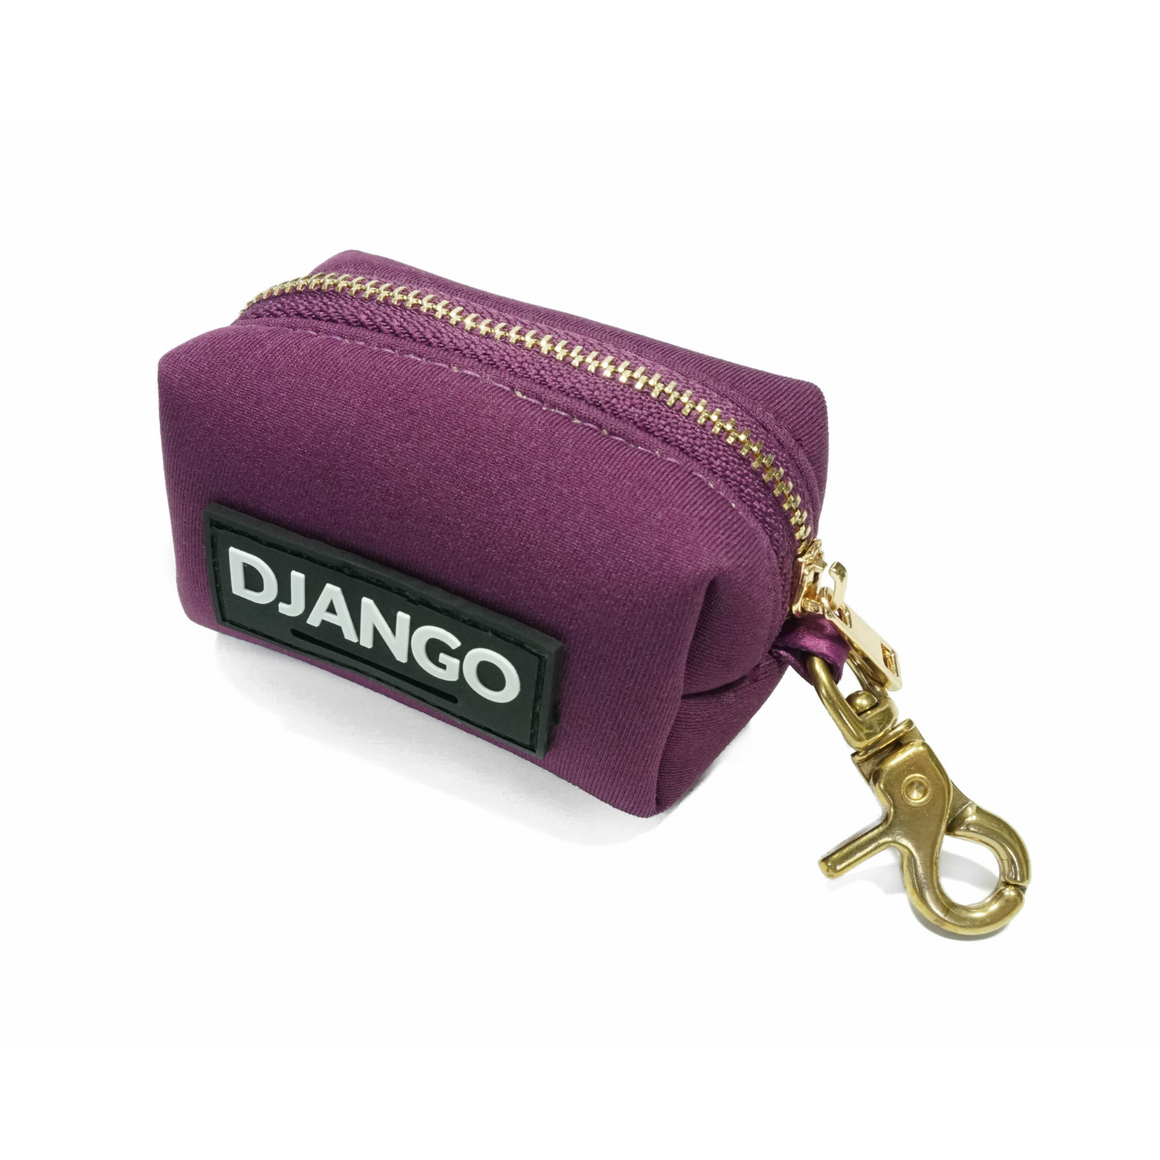 DJANGO Dog Waste Bag Holder - Stylish and classy poop bag holder for dogs - Plum Purple neoprene with solid brass hardware - djangobrand.com